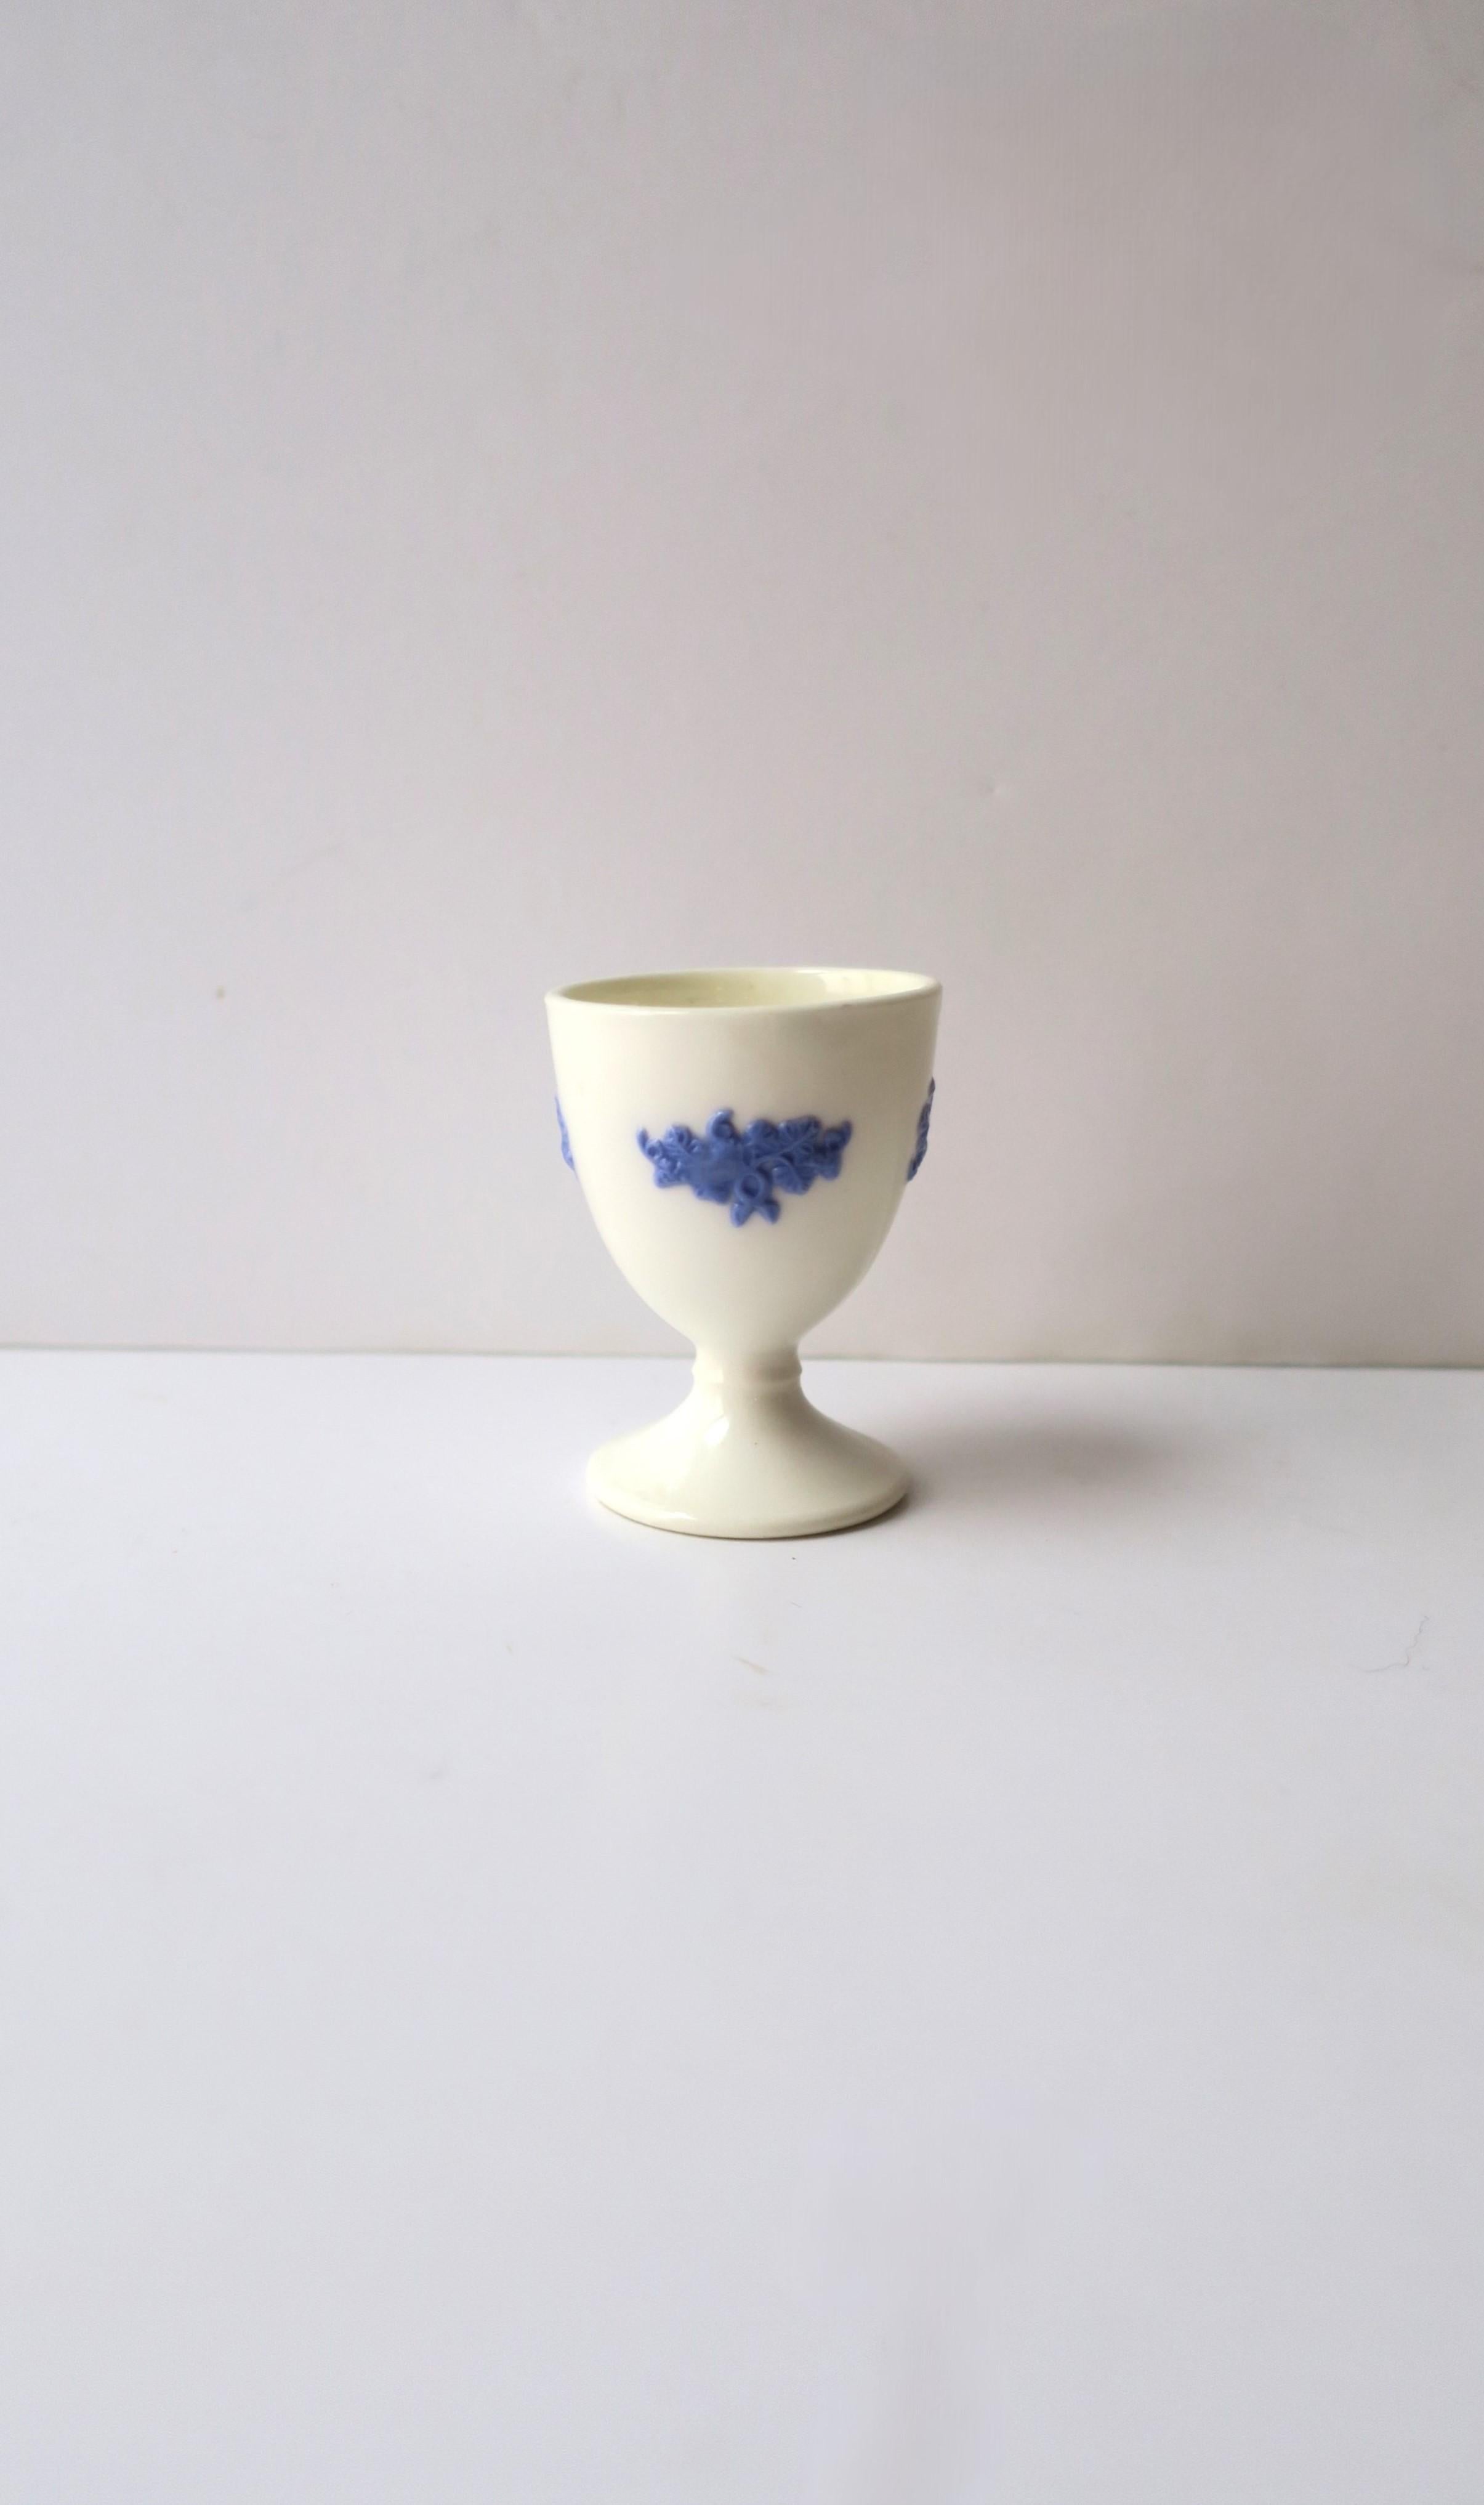 Glazed Blue and White Porcelain Egg Holder Cup For Sale